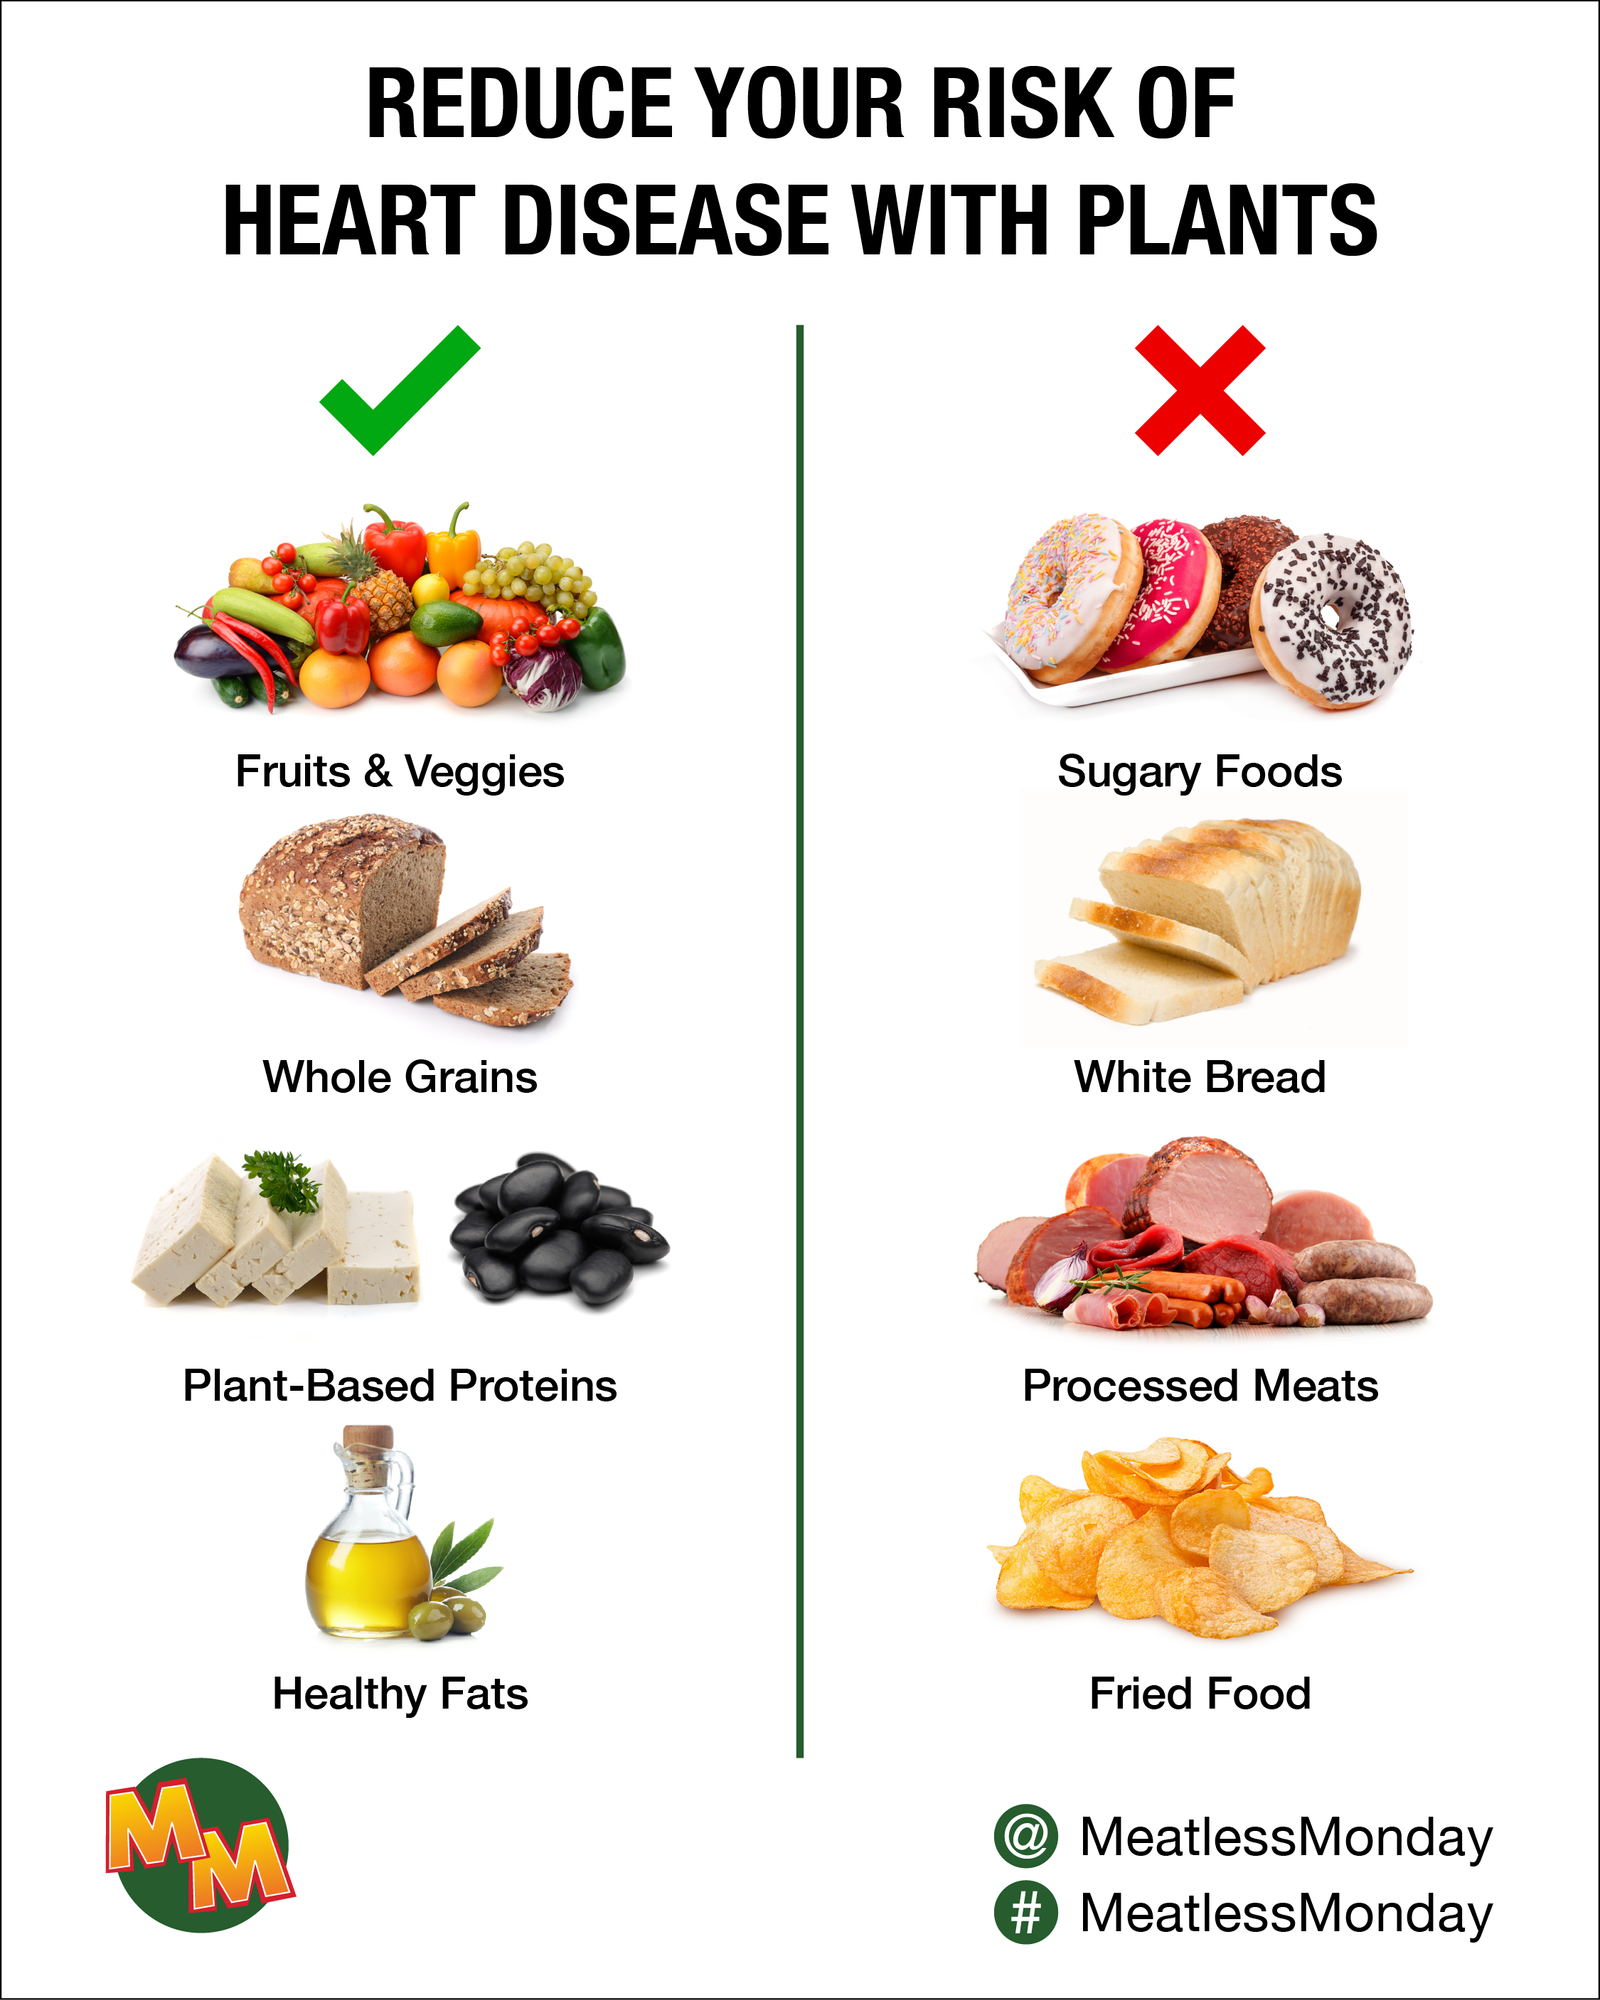 Heart-Healthy Foods to Prevent Heart Disease